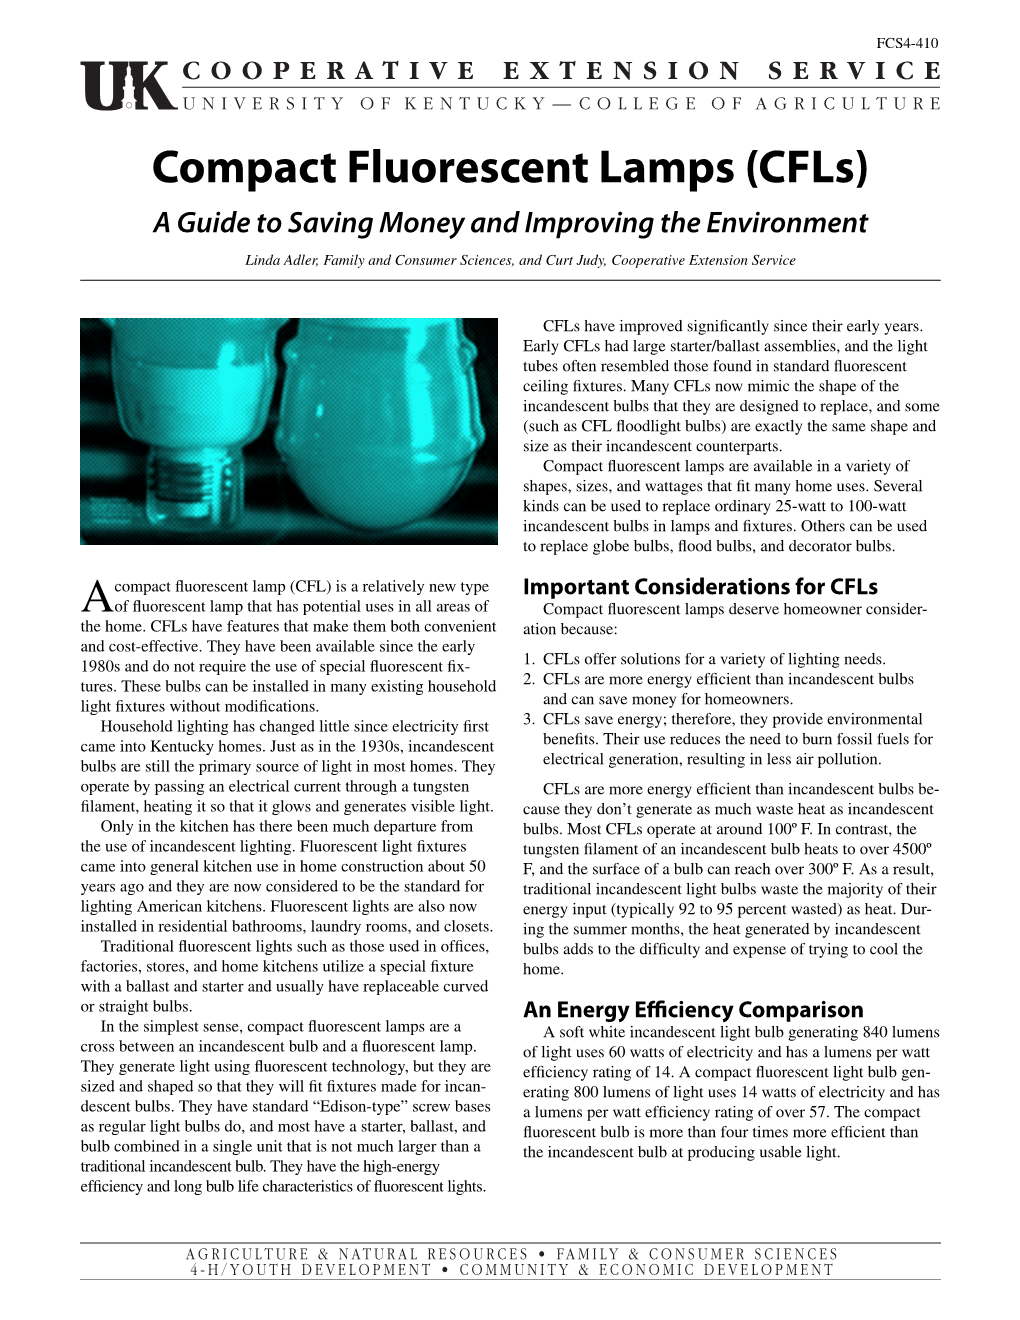 FCS4-410: Compact Fluorescent Lamps (Cfls)